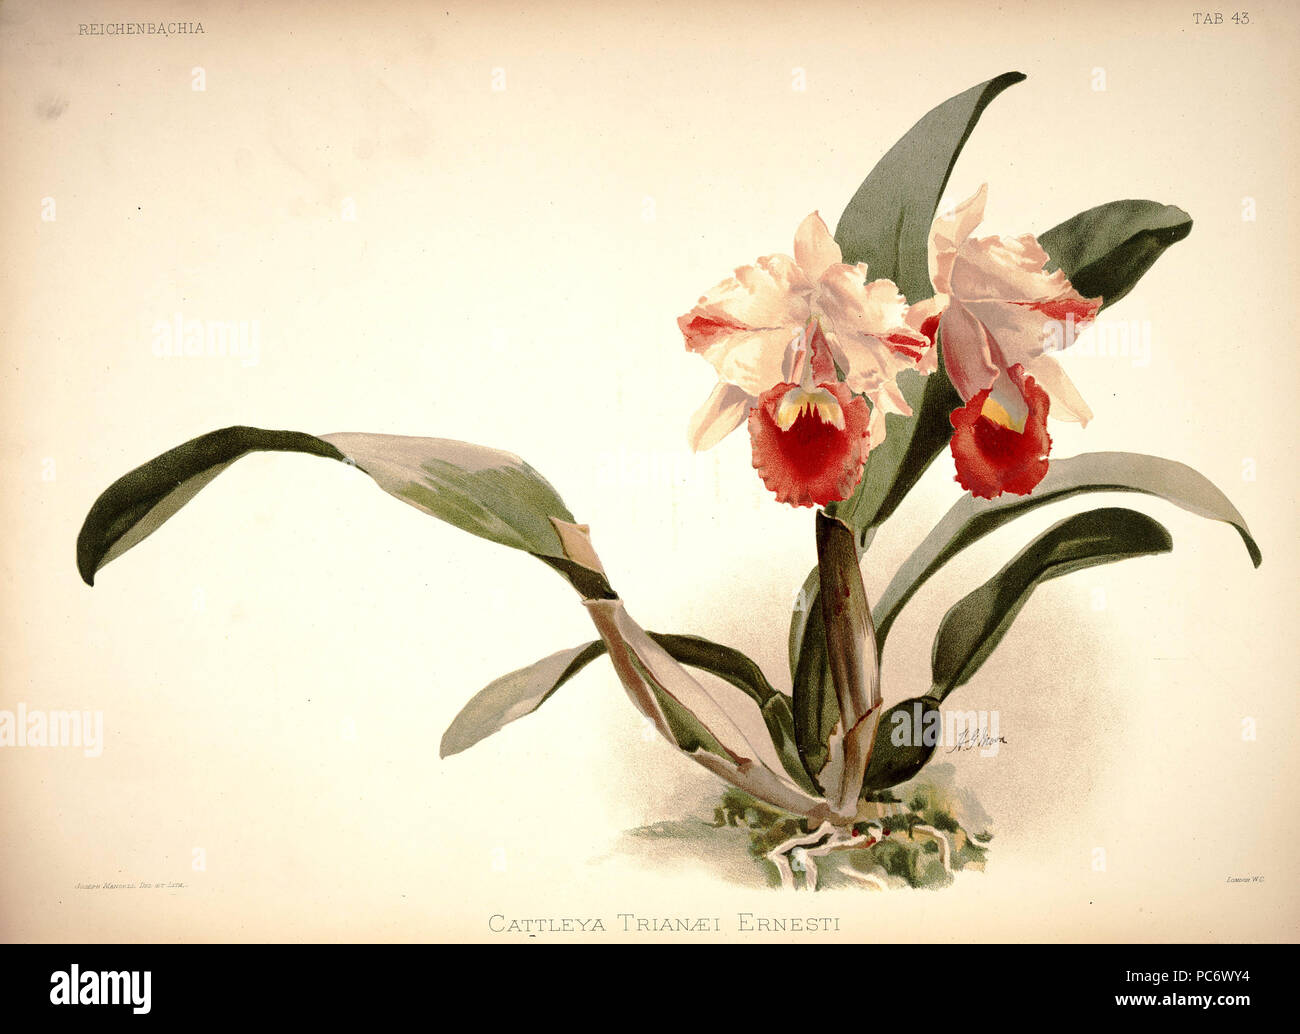 220 Frederick Sander - Reichenbachia I plate 43 (1888) - Cattleya trianae ernesti Stock Photo